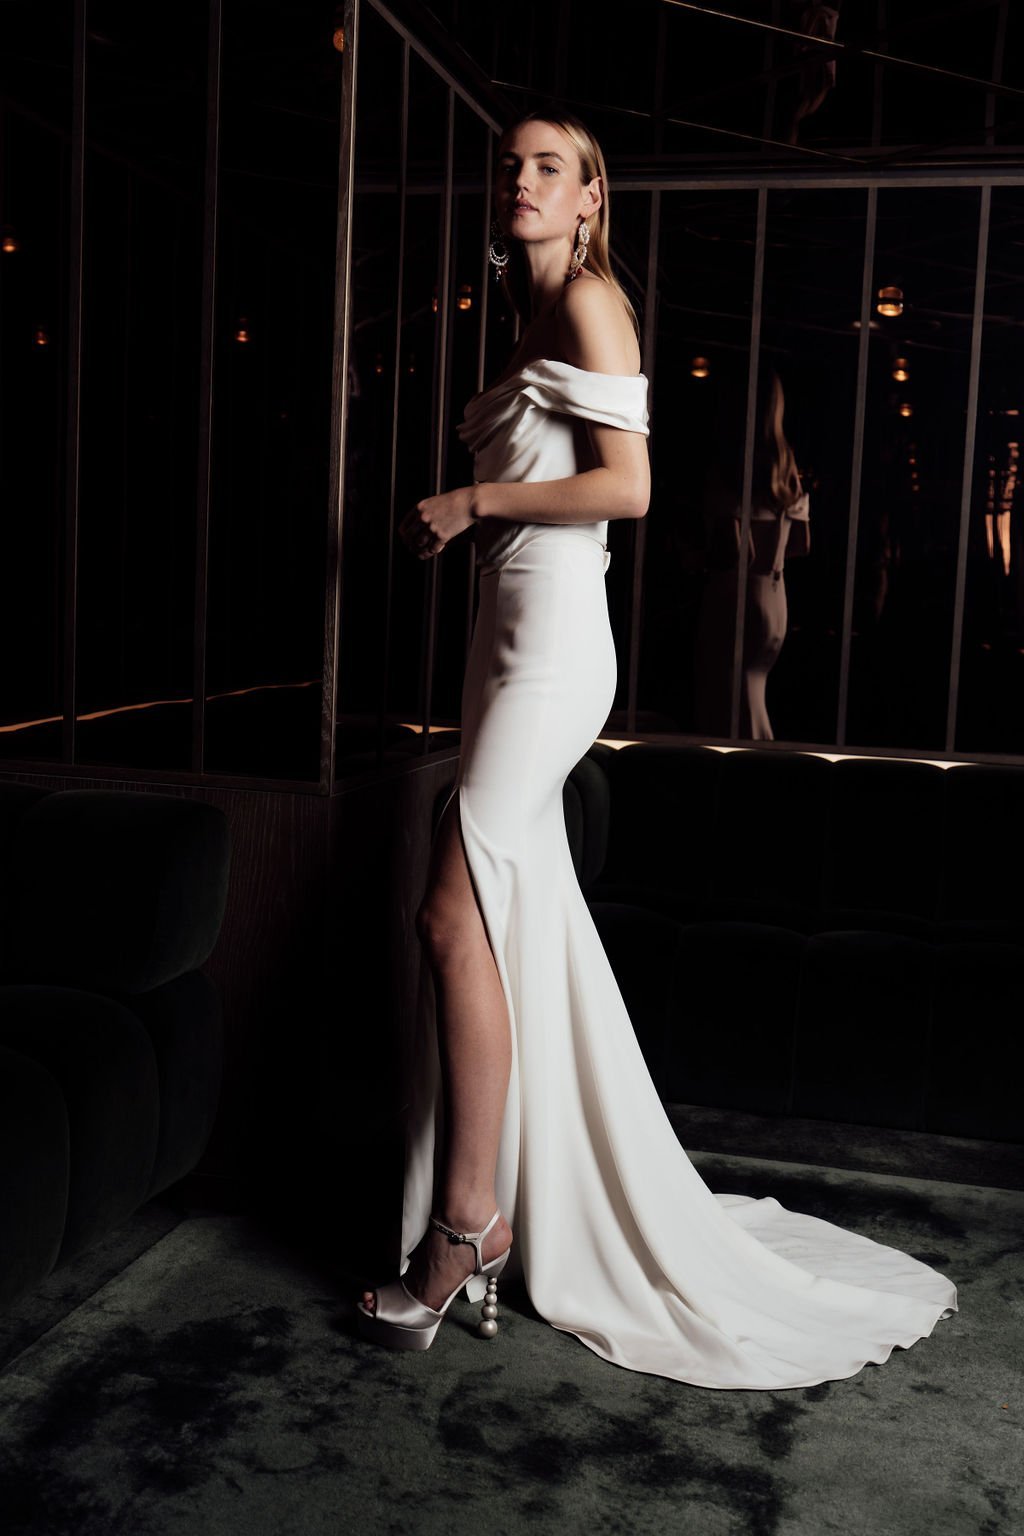 Foxglove Skirt — Halfpenny London Wedding dresses and separates in London